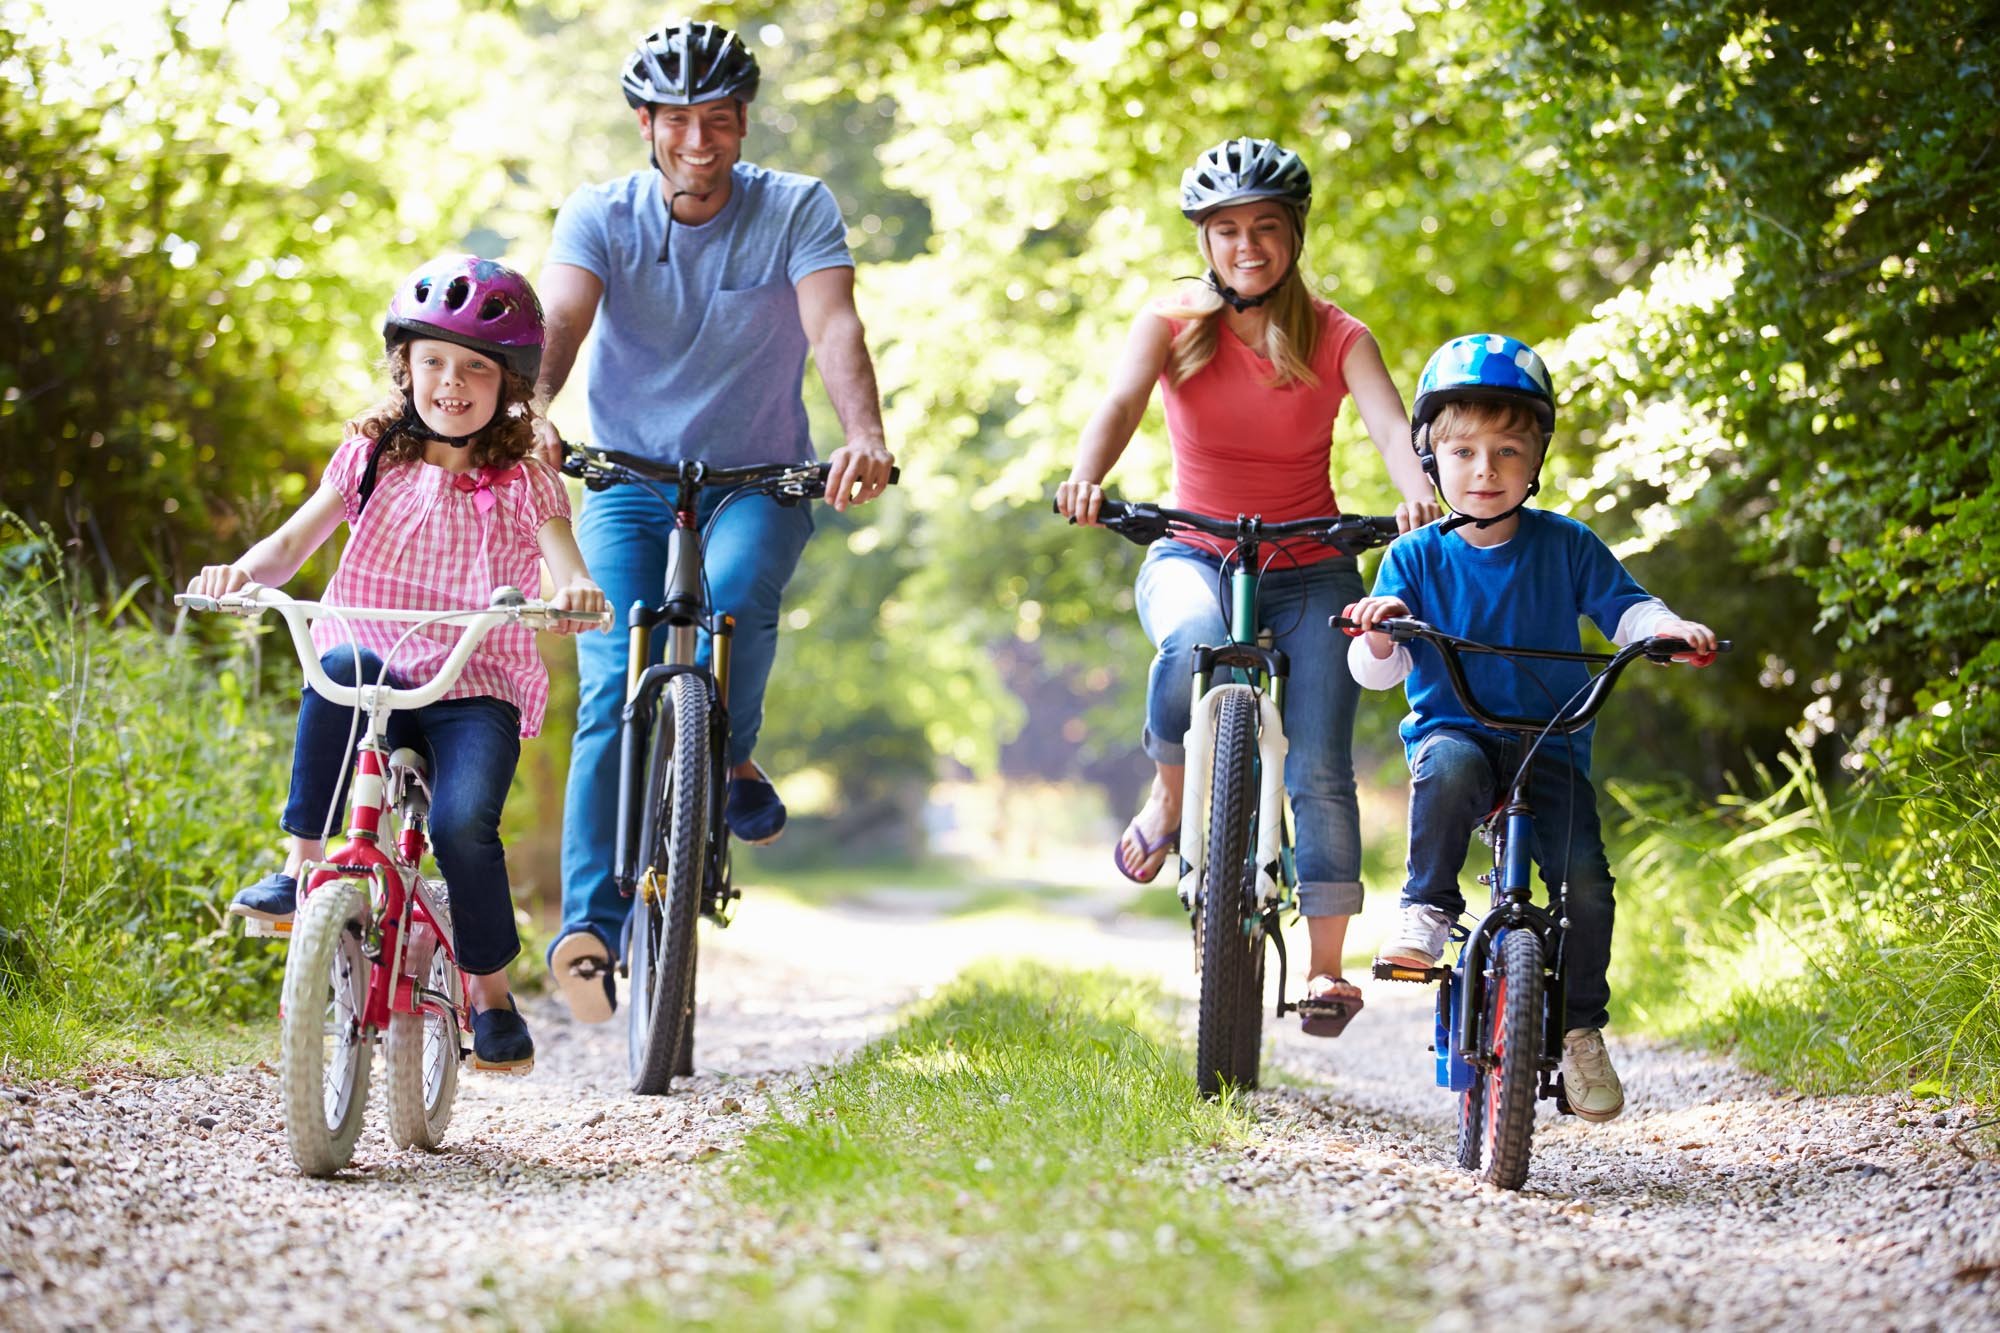 Famille en balade à vélo, chacun portant un casque